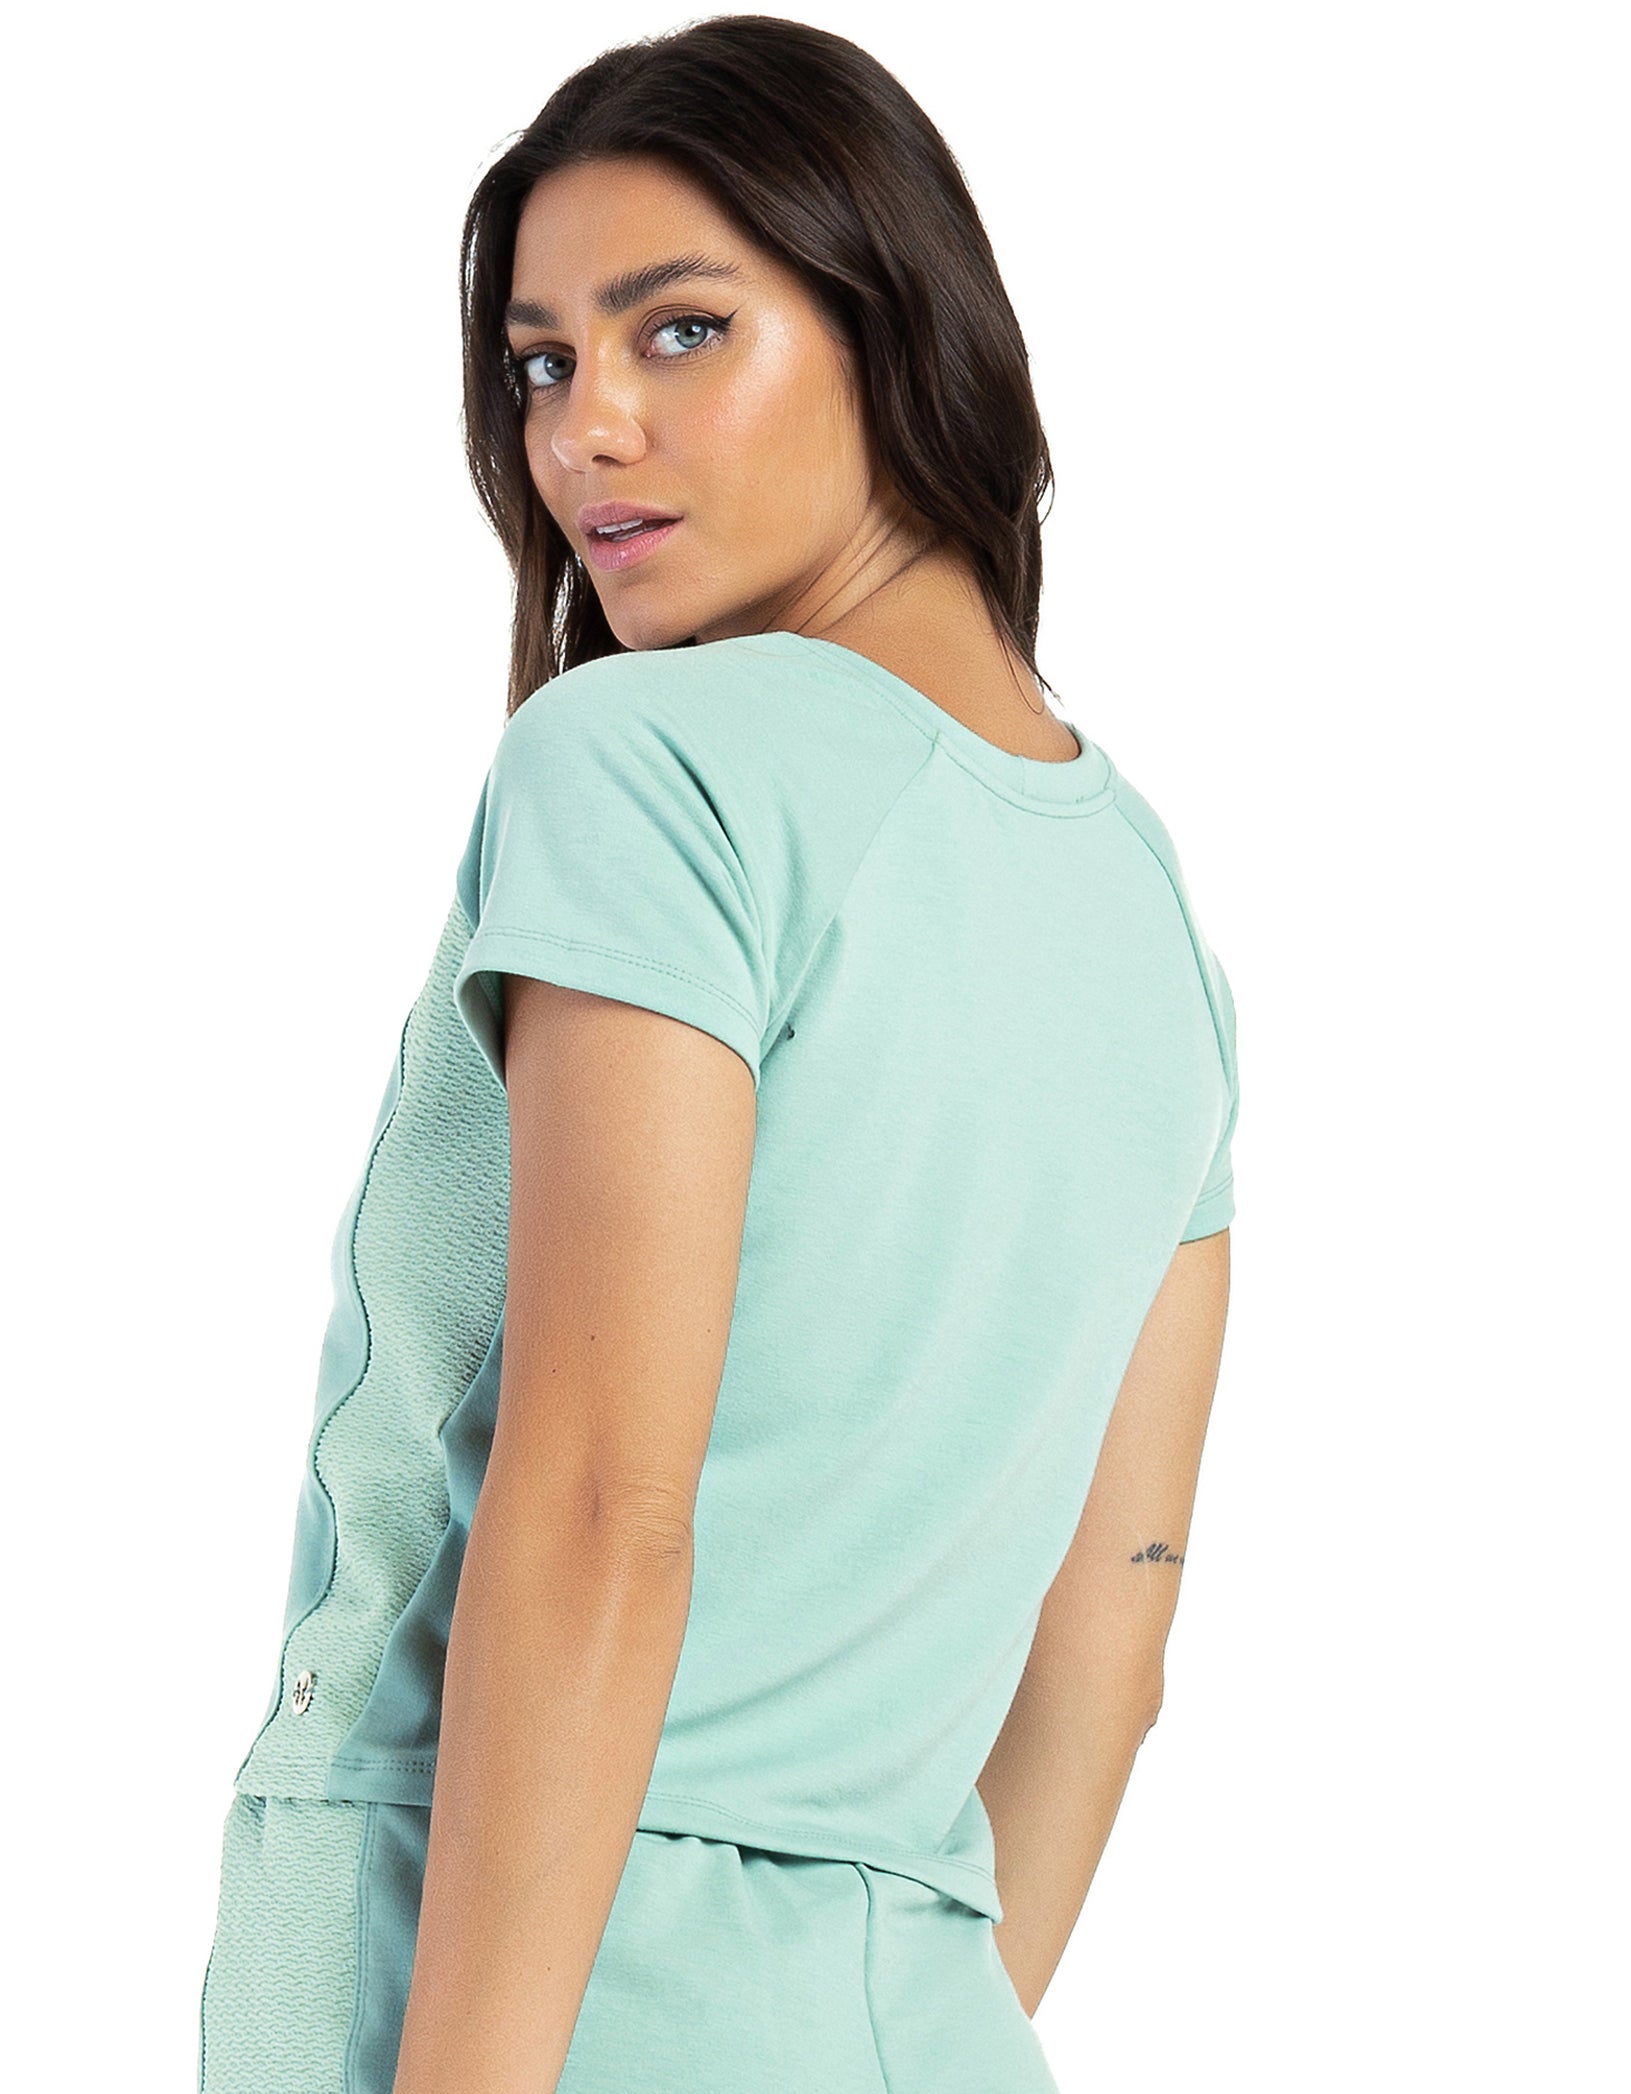 Vestem - Shirt Short Sleeve Bayo Verde Etero - BMC538.C0291